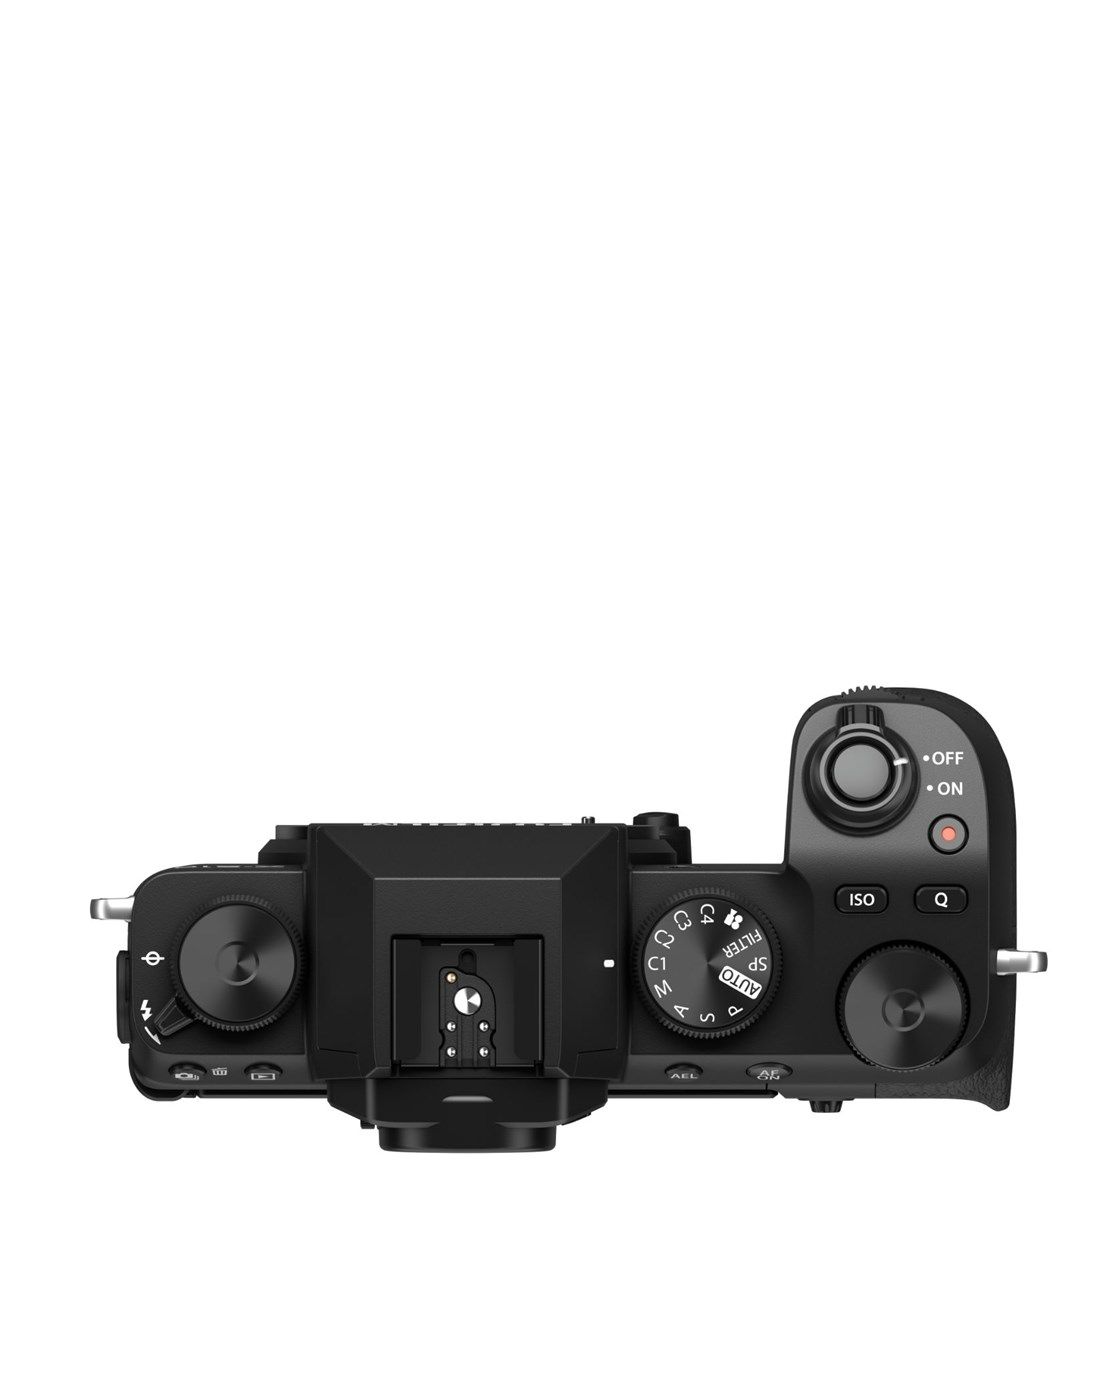 Fujifilm X-S10 Mirrorless Camera with XF 18-55mm F2.8-4 R Lens - Black